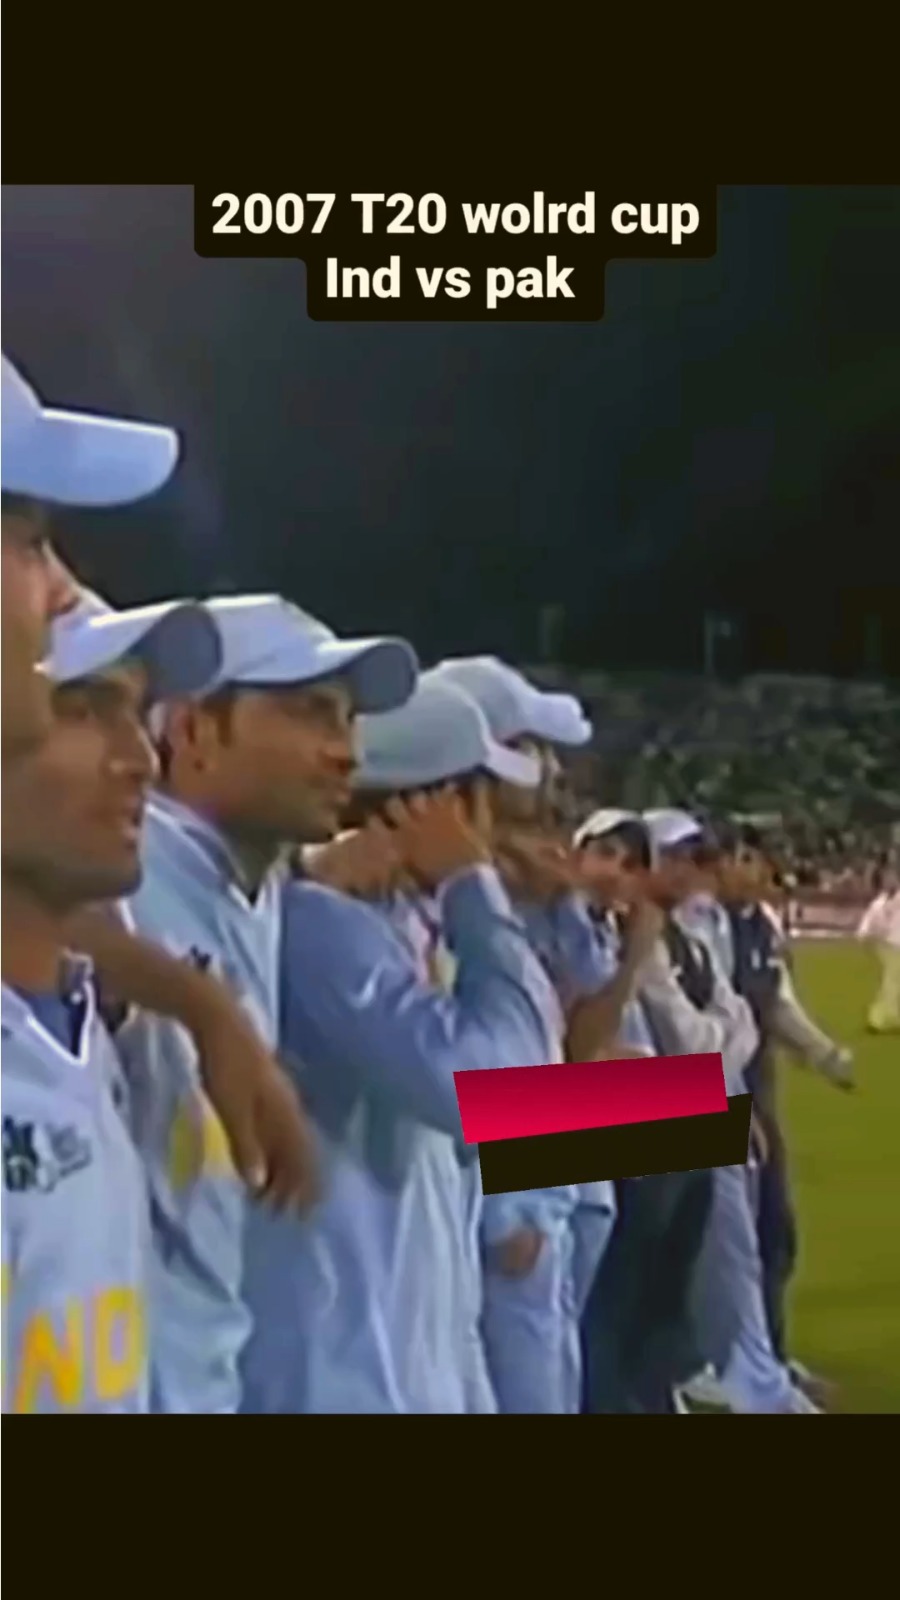 India won in Super Over 🔥🔥🔥